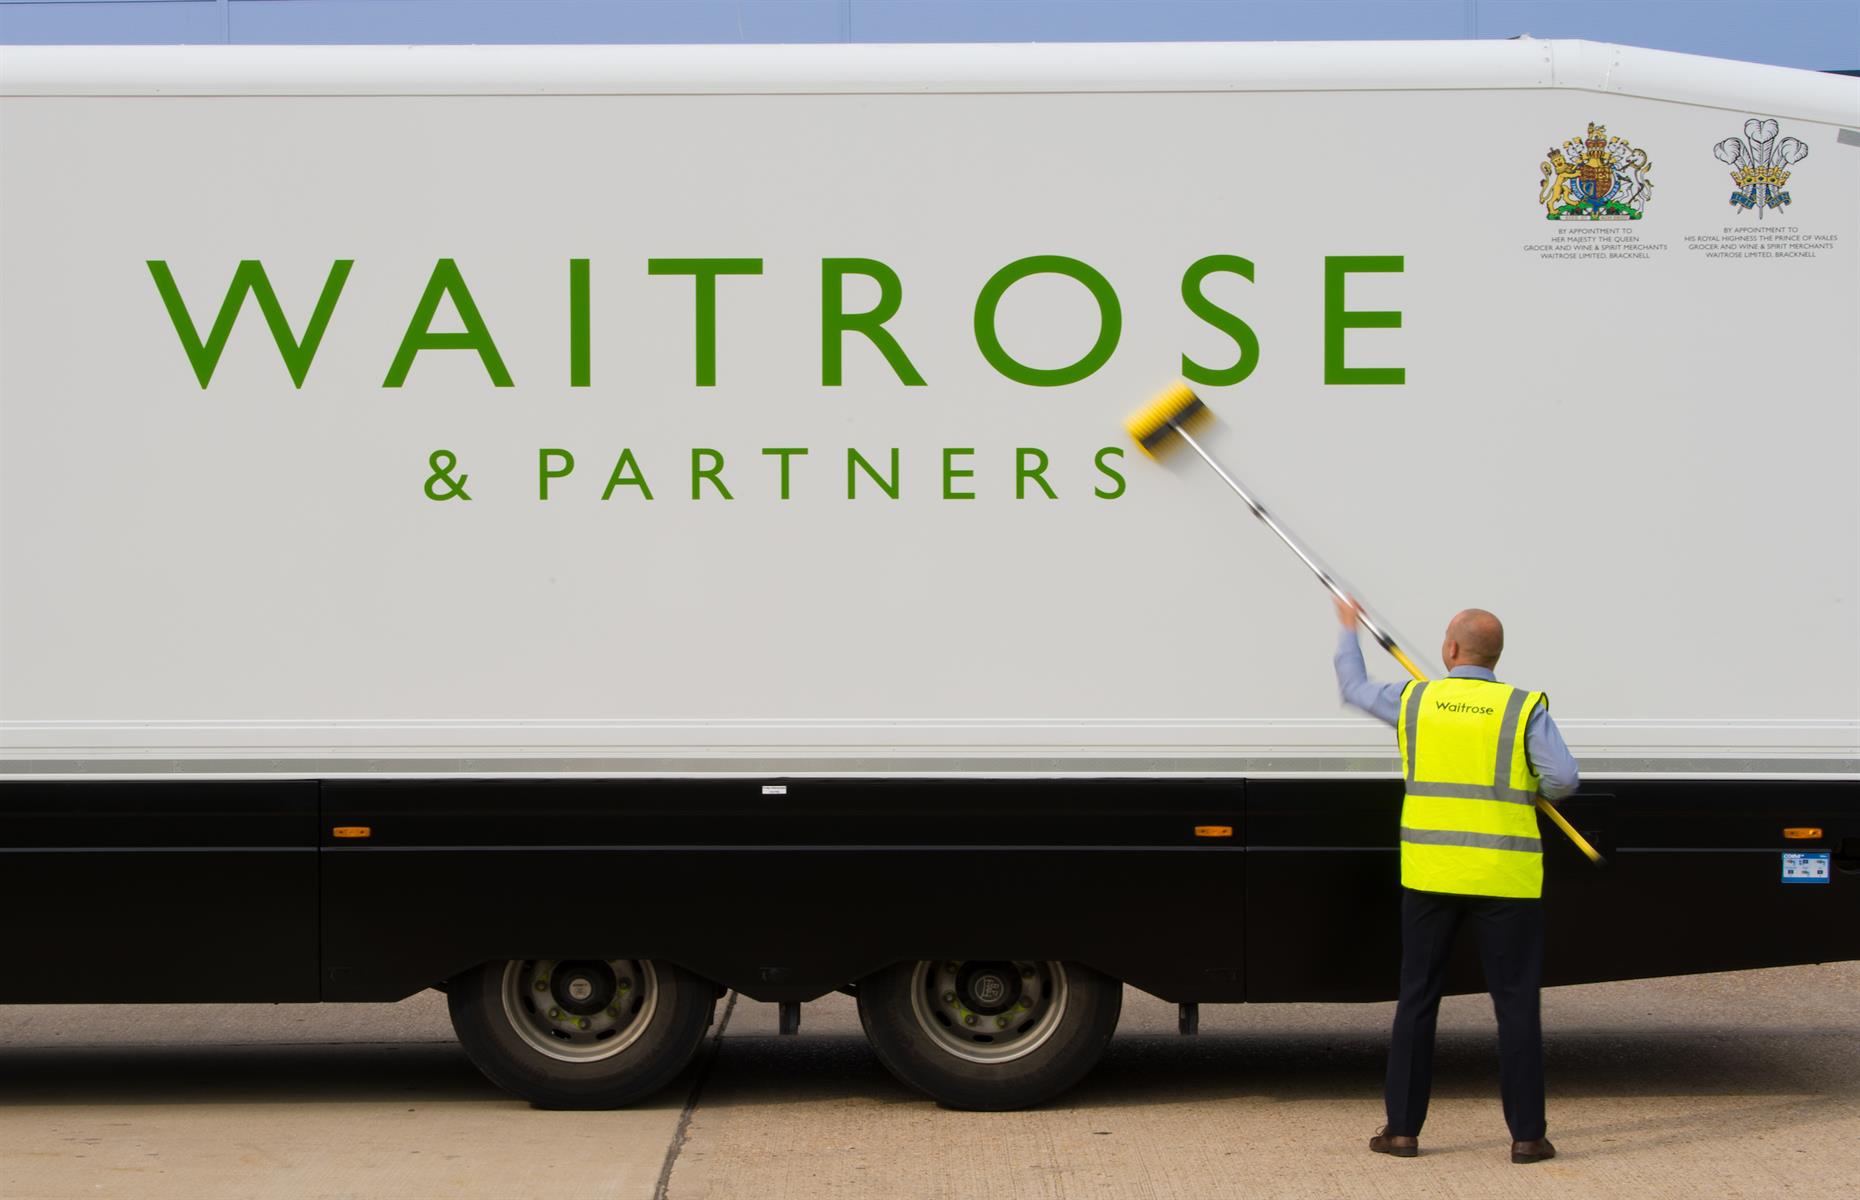 Rebranding as Waitrose & Partners